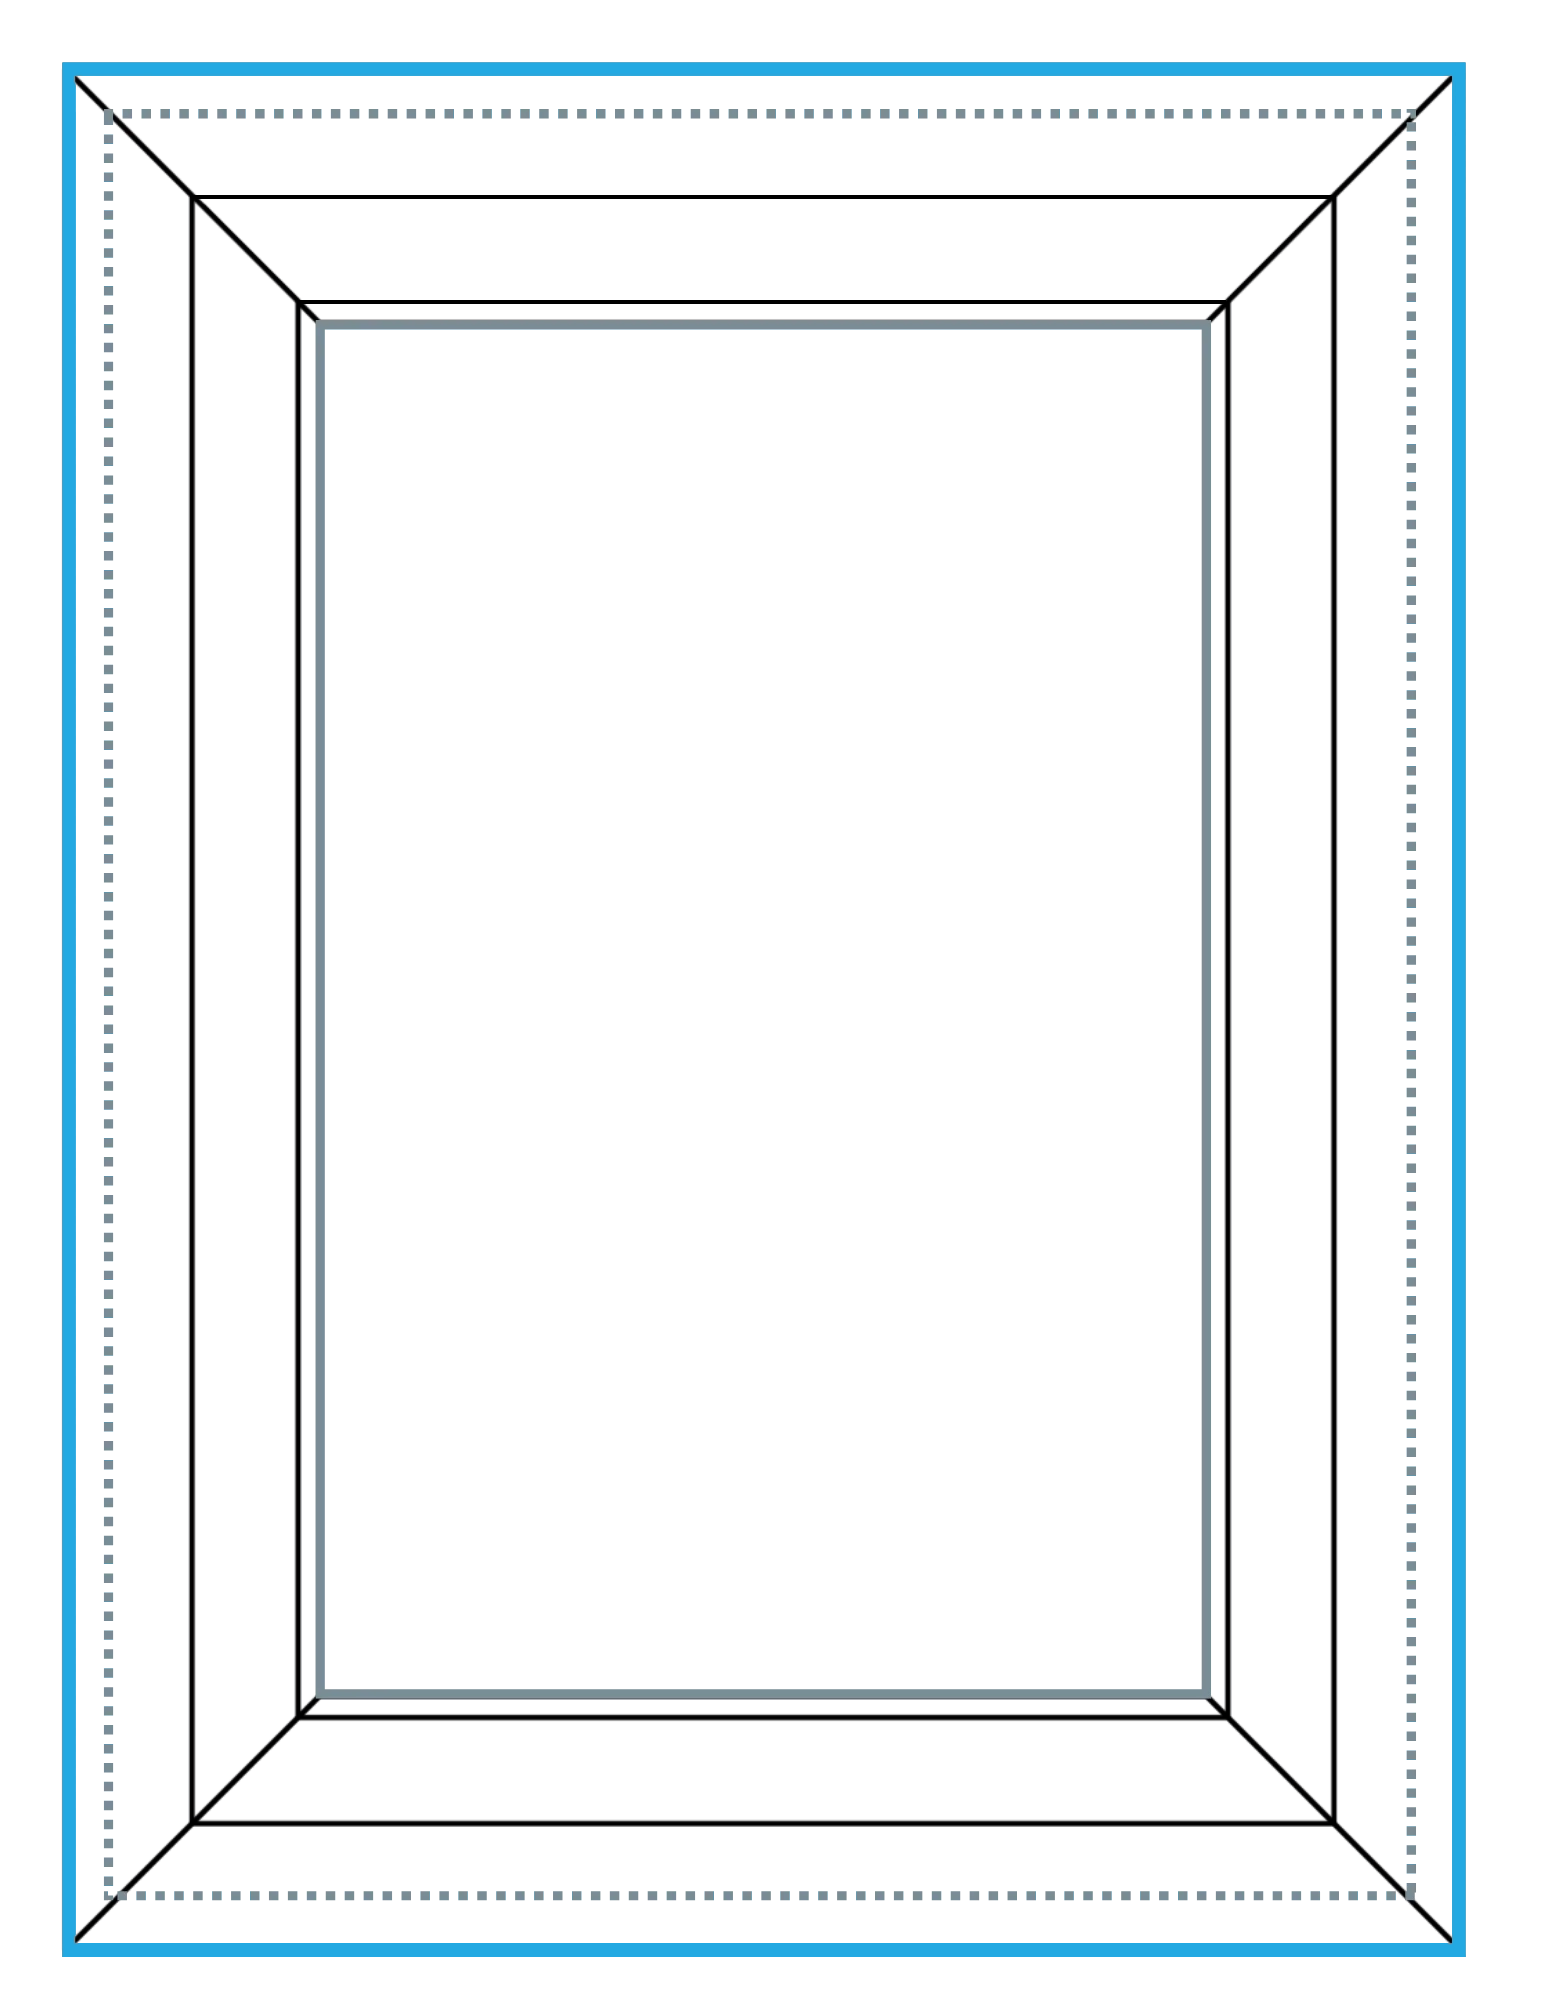 frame dimensions